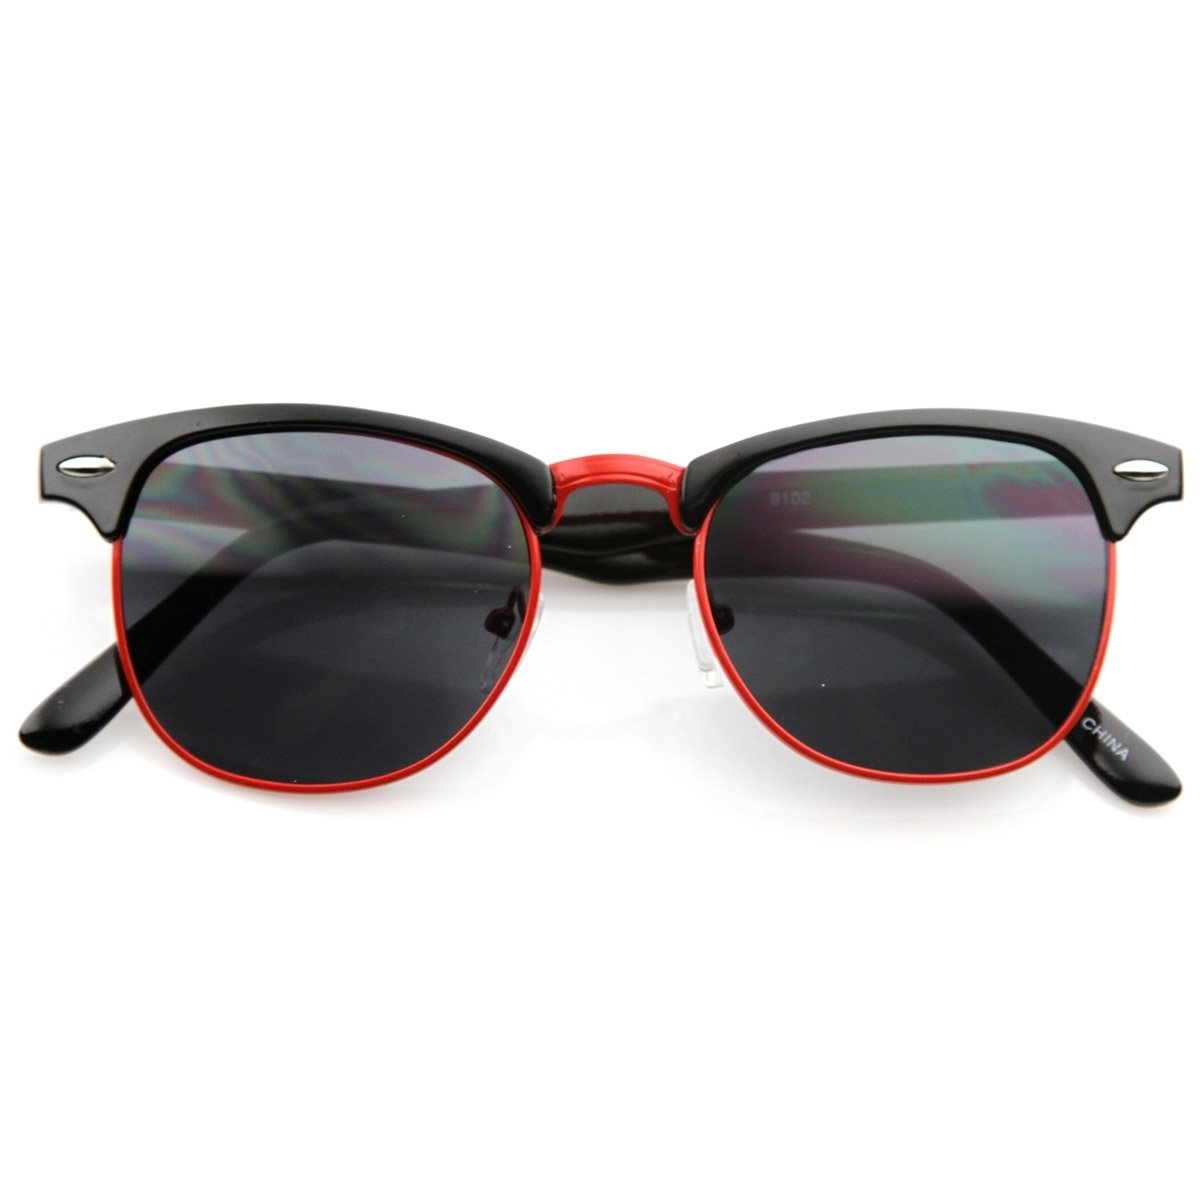 Classic Retro Fashion Colorful Half Frame Horn Rimmed Style Sunglasses - Black-Blue